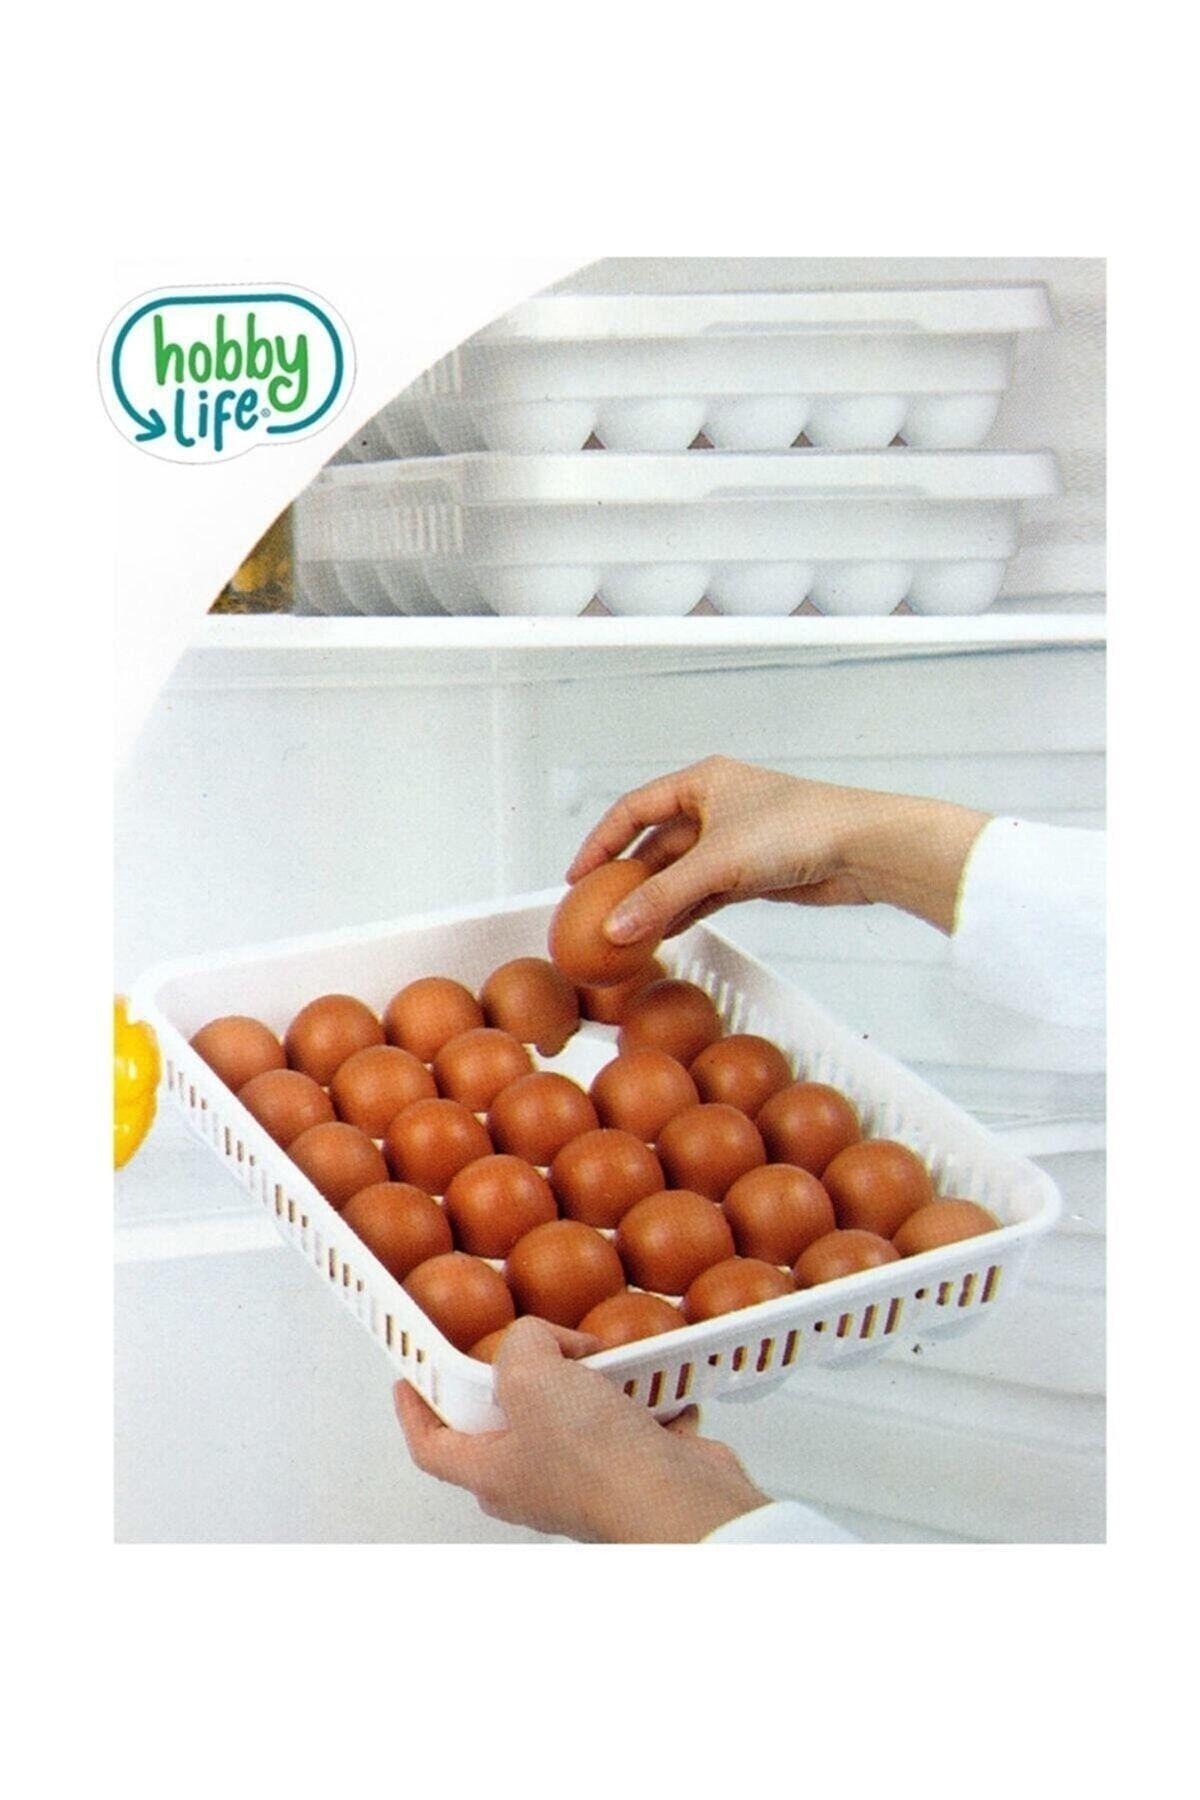 HOBBY LİFE Kapaklı Yumurta Organizeri 30'lu Yumurta Saklama Kabı Steril Yumurtalık